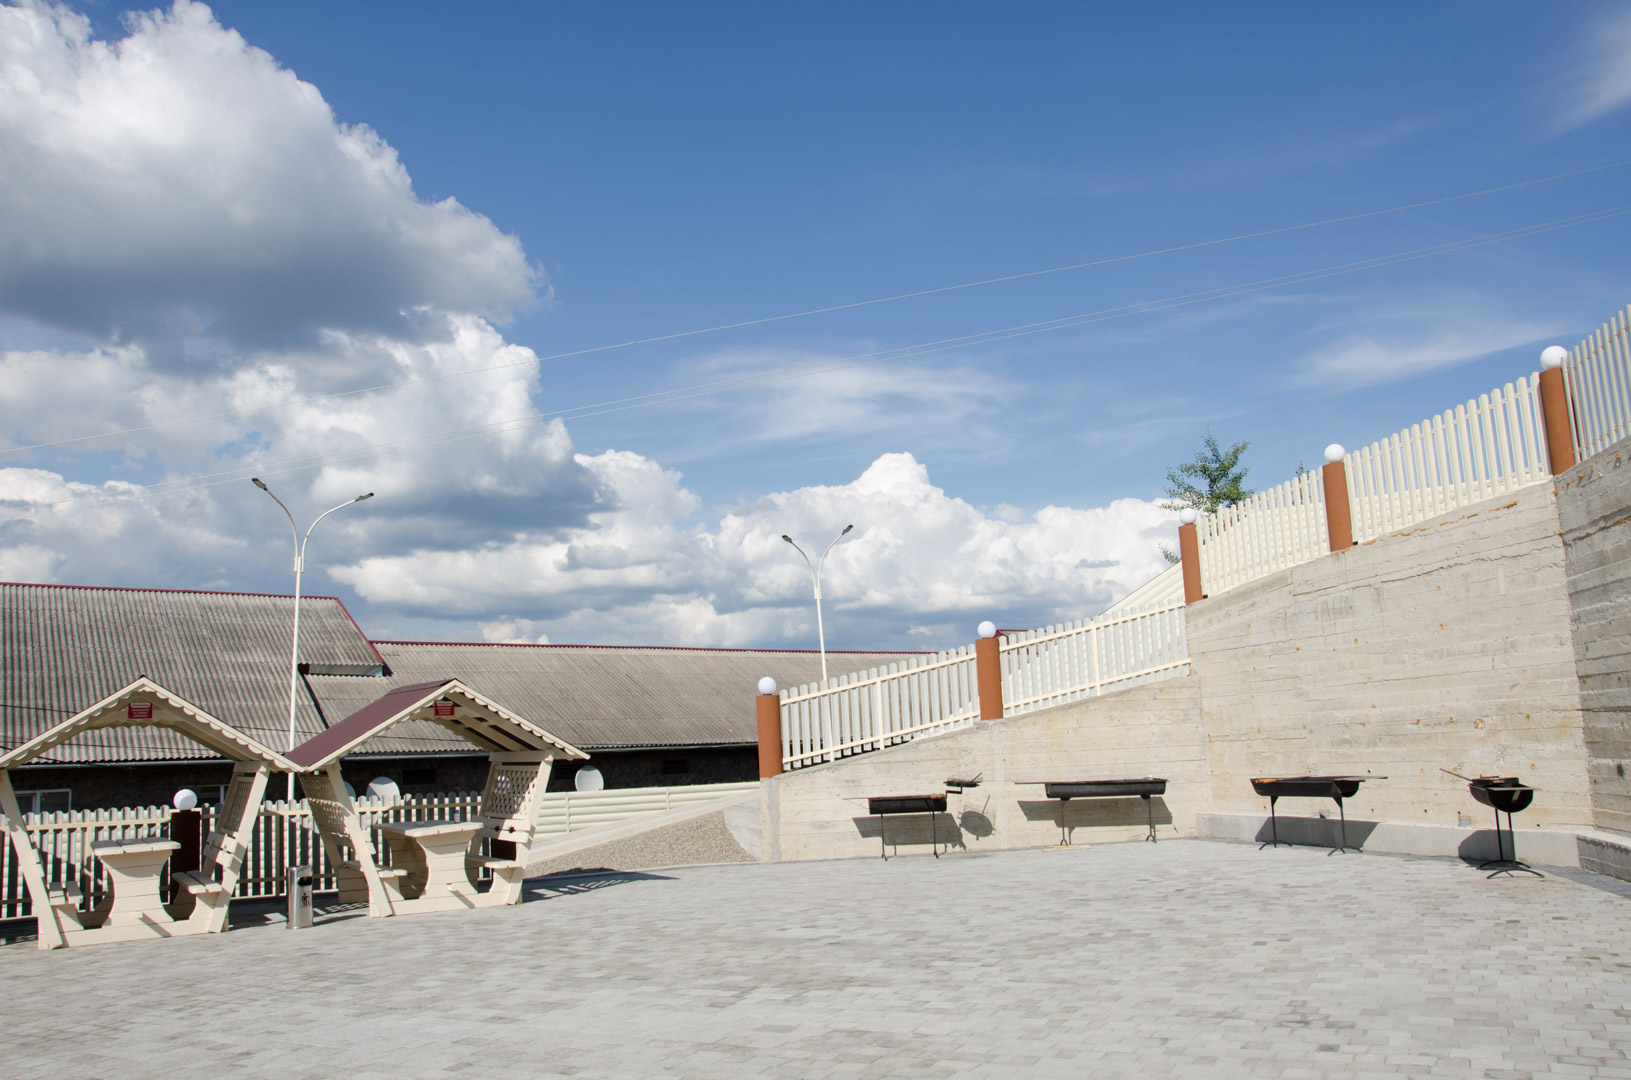 База відпочинку "Panorama" Солотвино